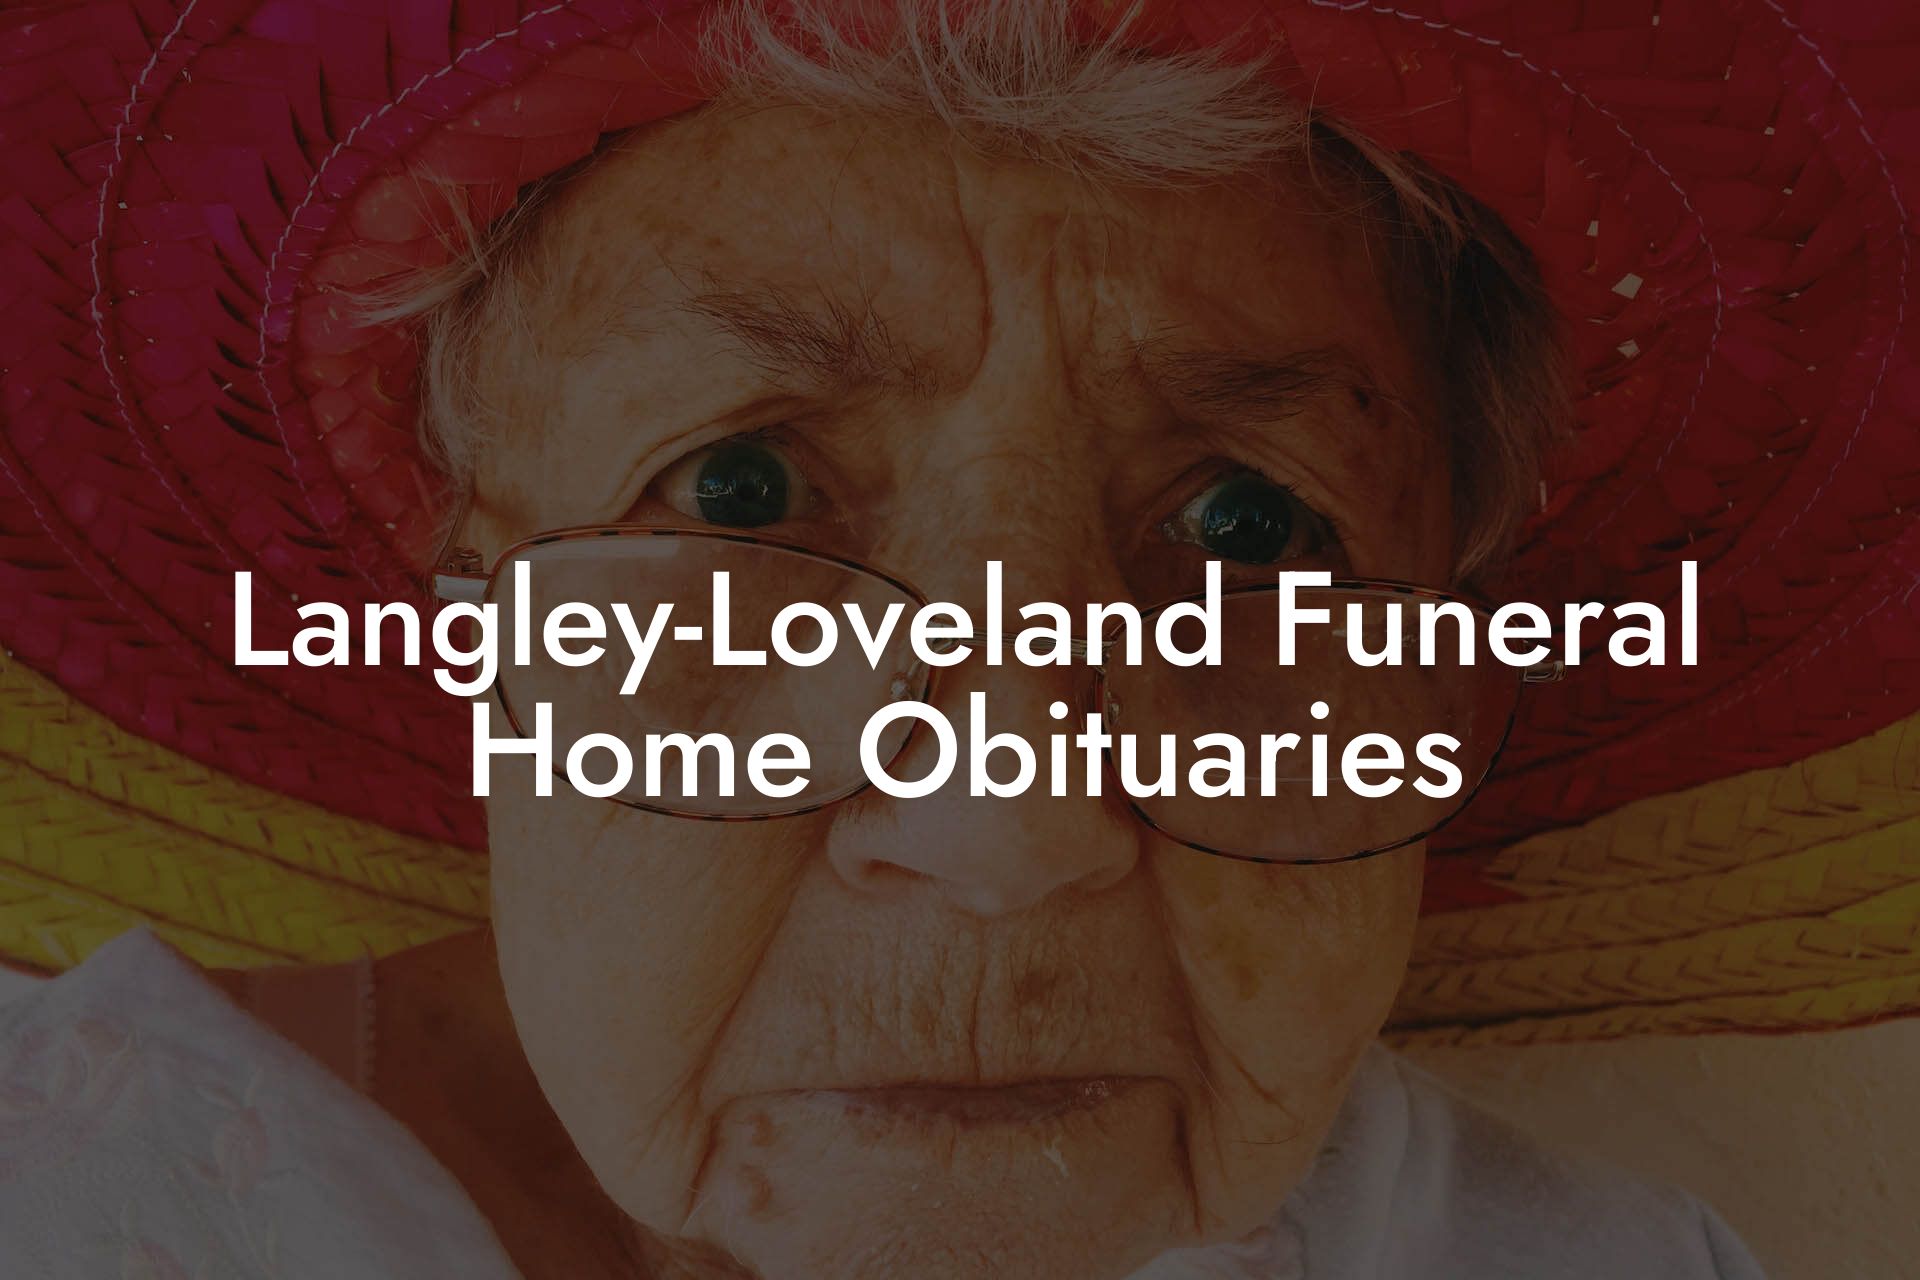 Langley-Loveland Funeral Home Obituaries